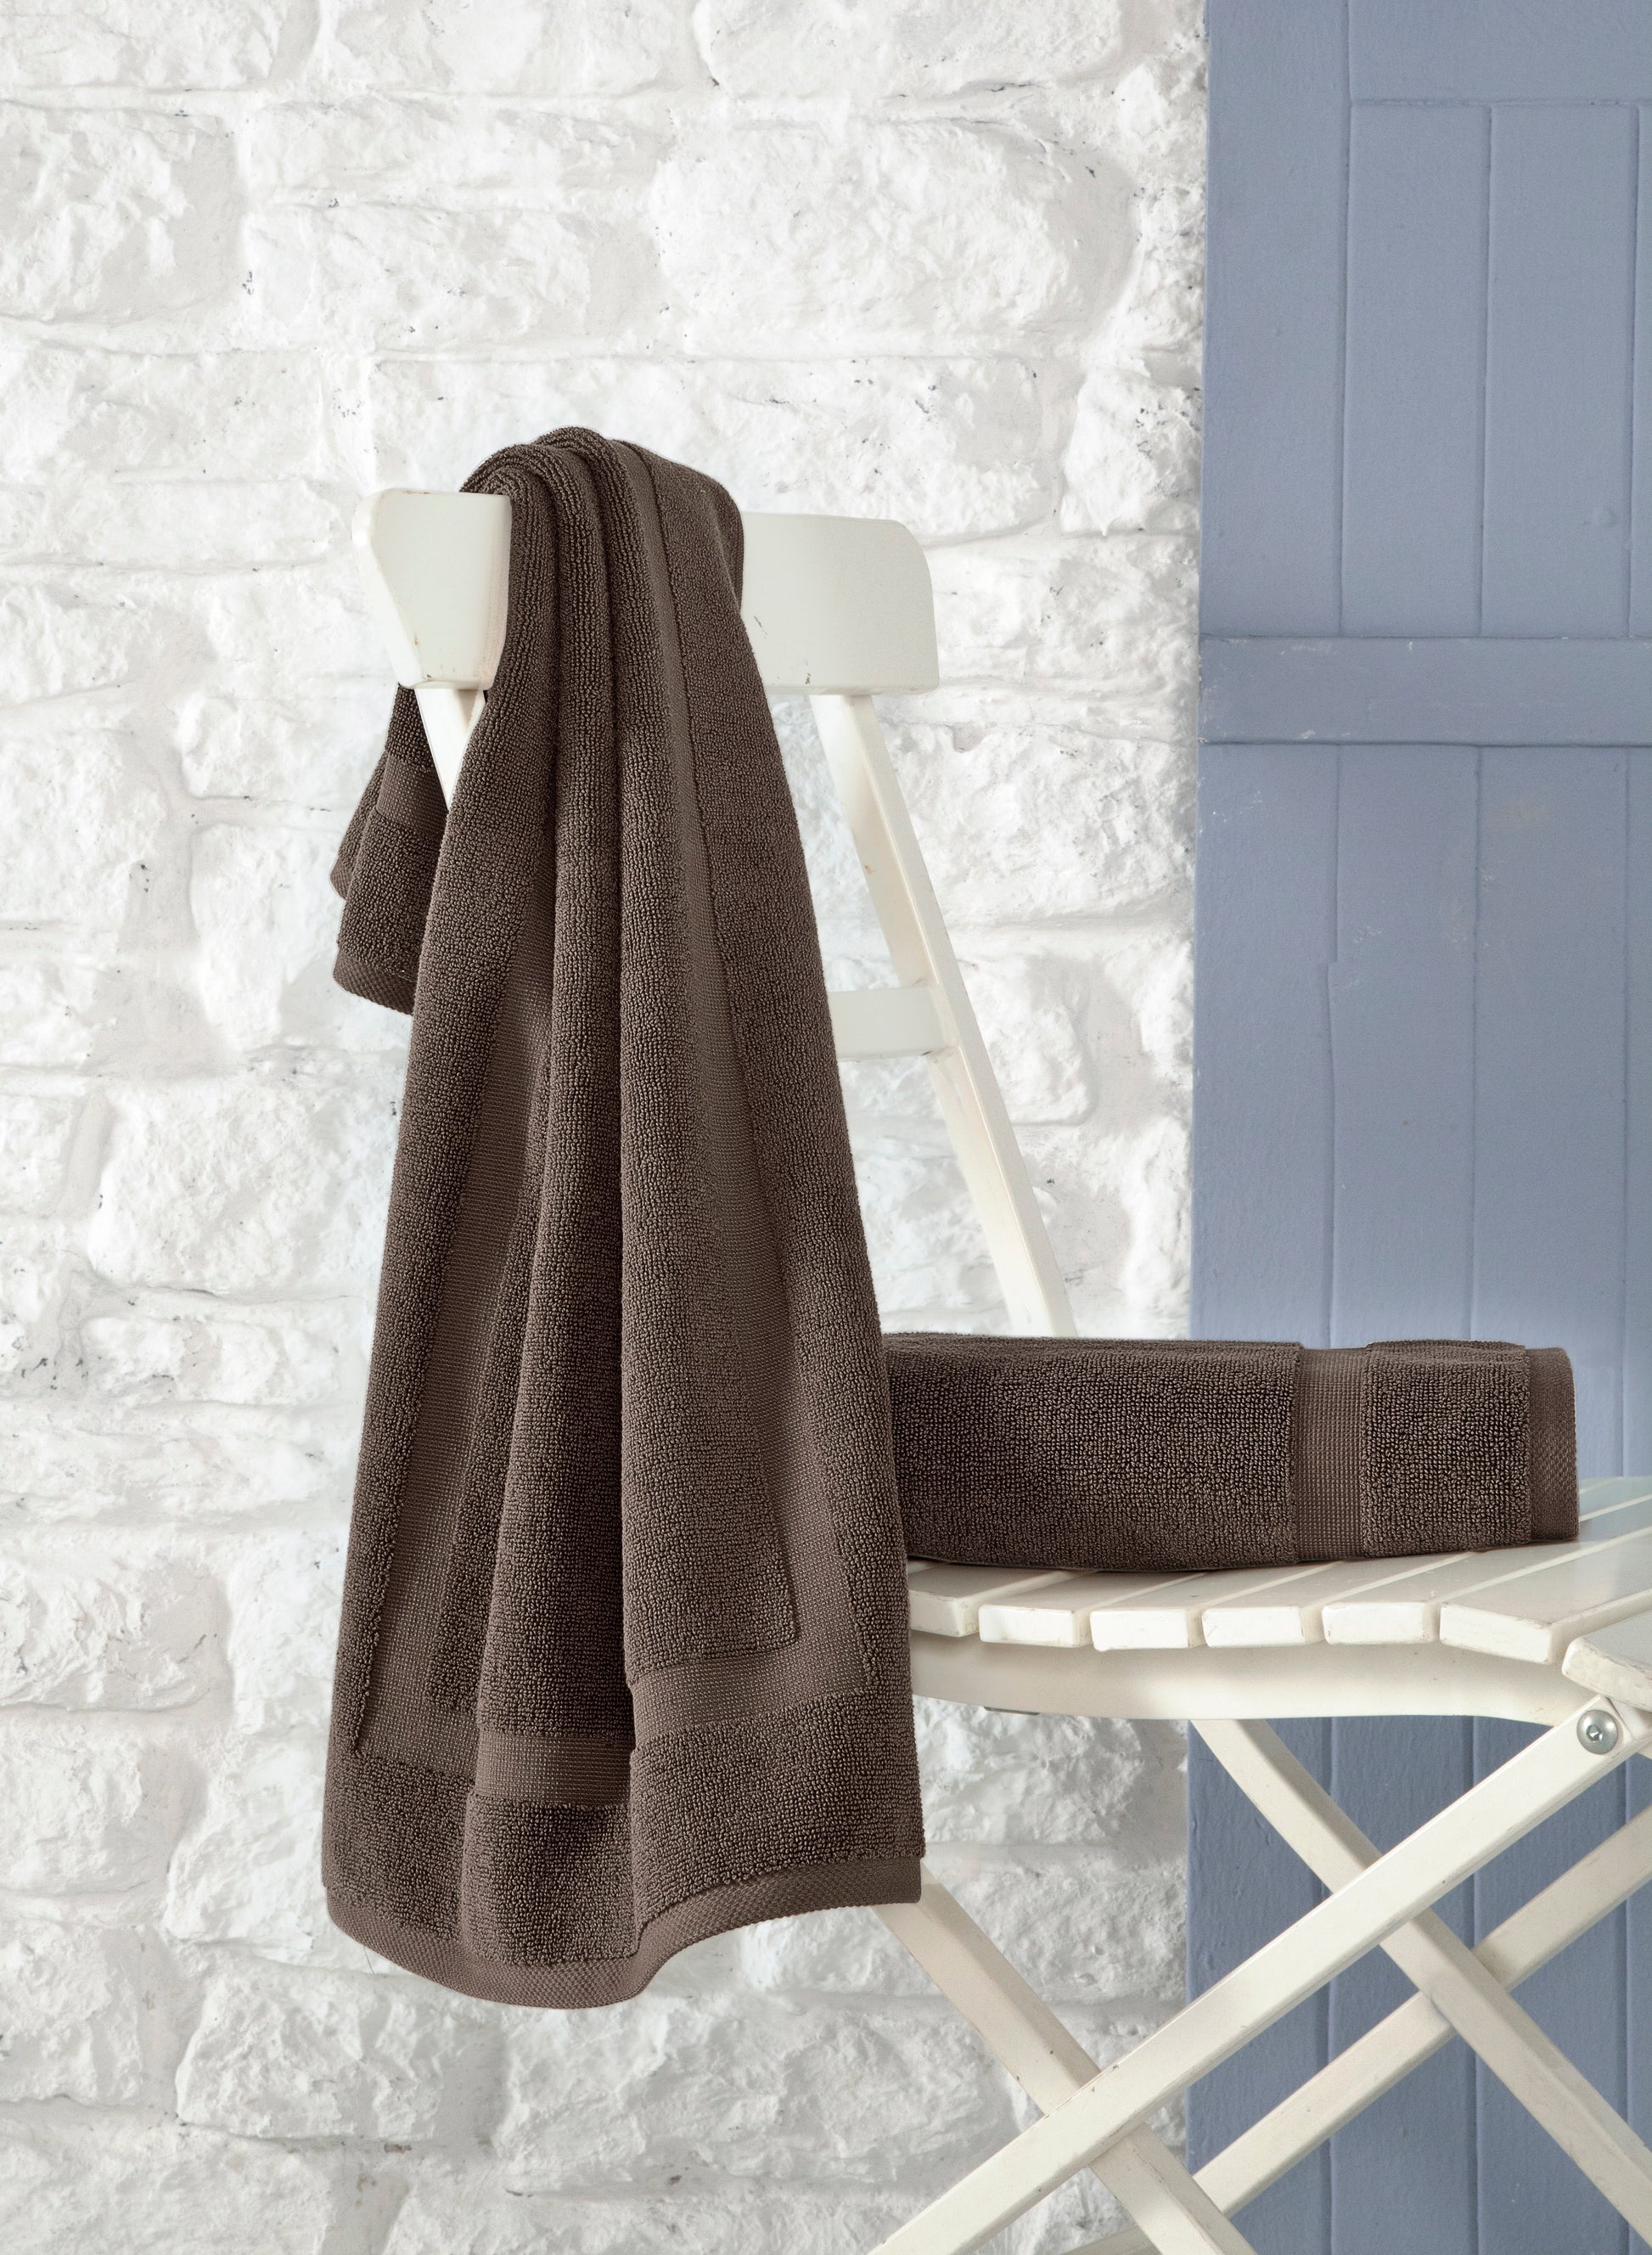 Royal Turkish Towel Luxury Cambridge Cotton Jumbo SPA Bath Sheet - On Sale  - Bed Bath & Beyond - 8597687